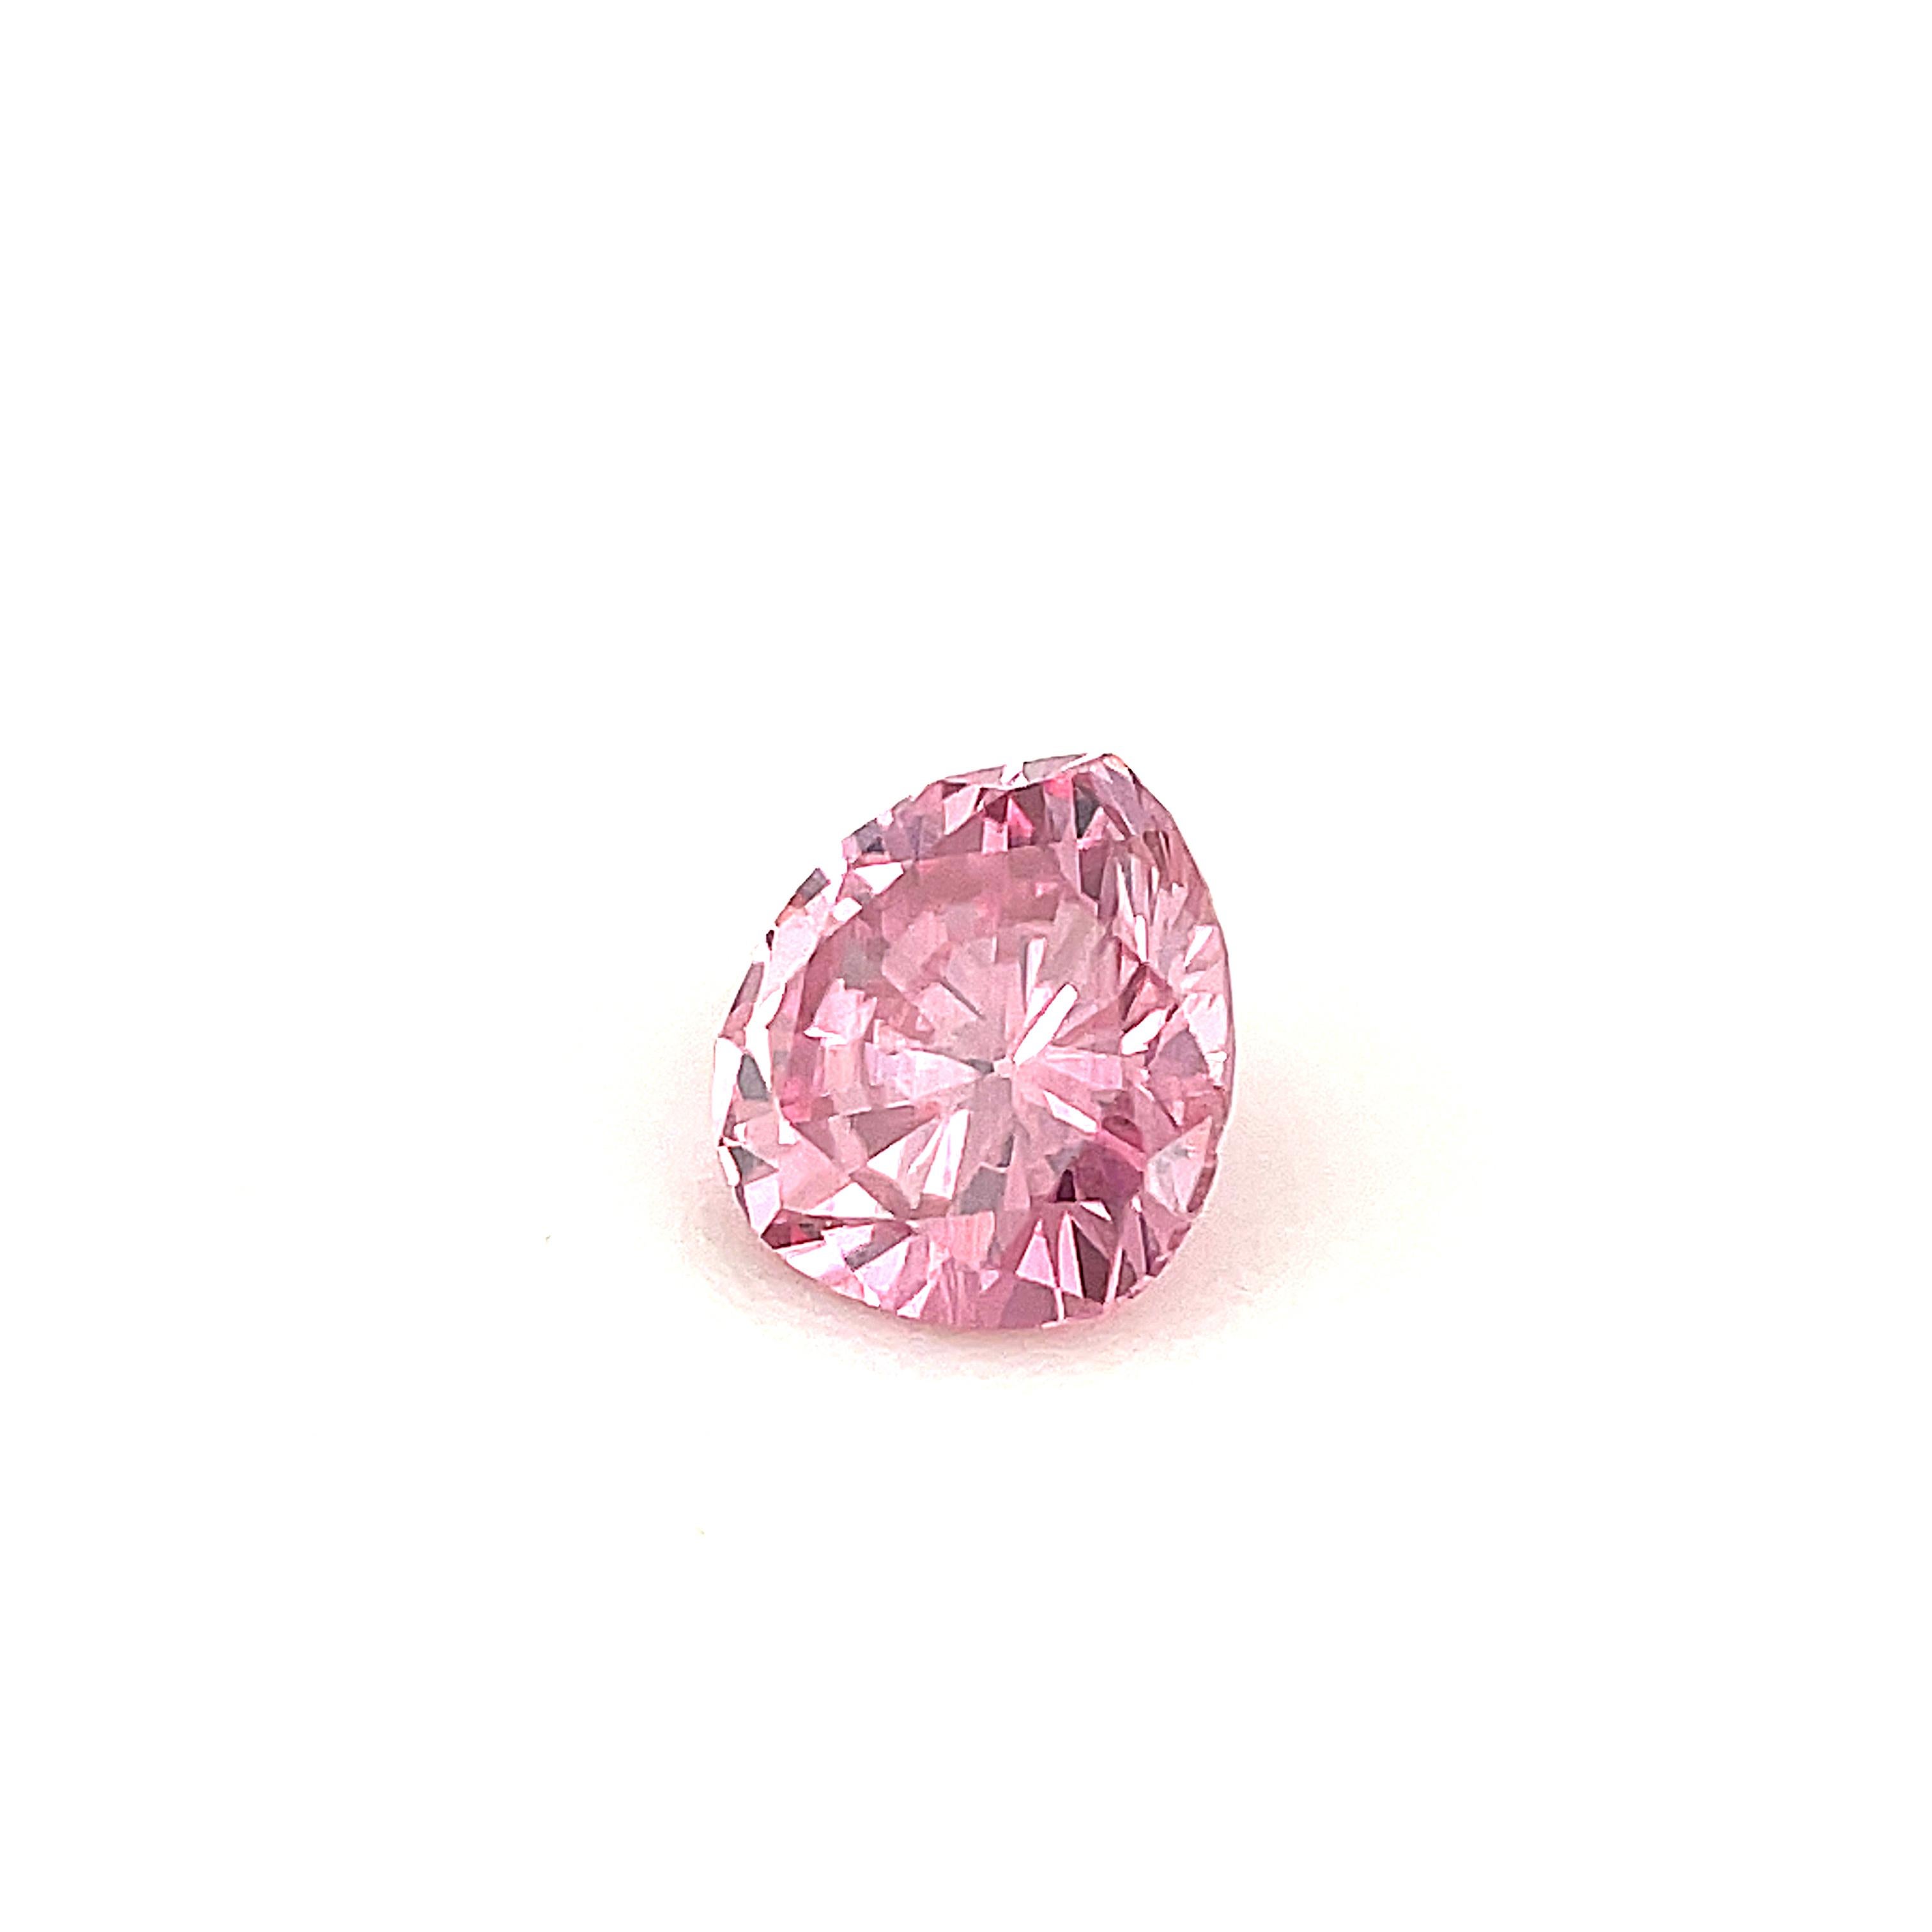 Women's or Men's Fancy Intense Purplish Pink Natural Diamond, Loose .24 Carat Pear, GIA Certified For Sale